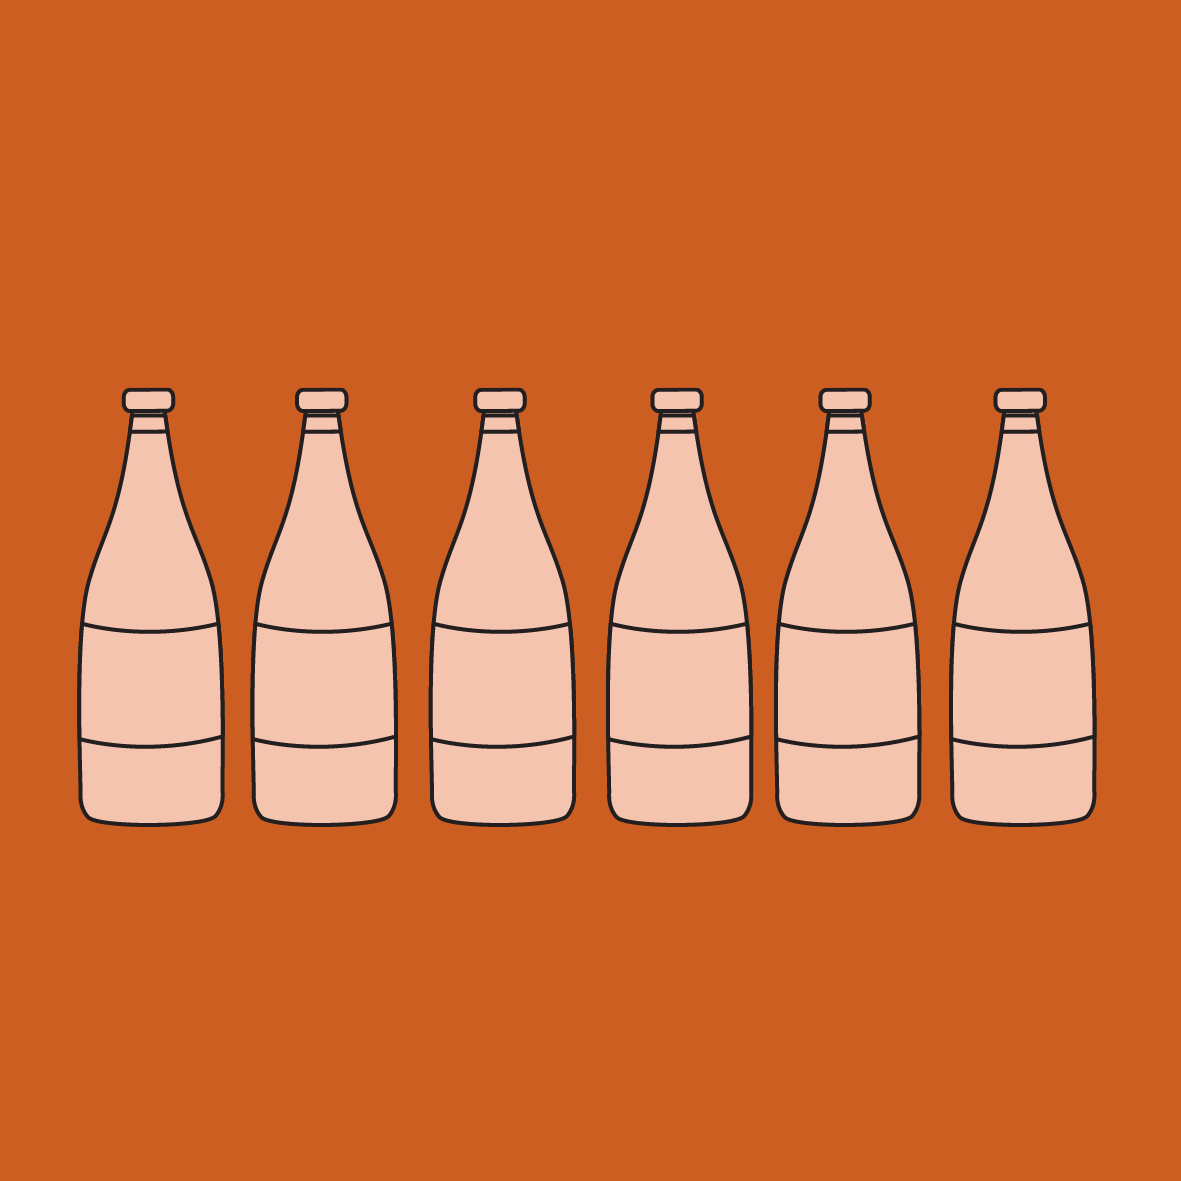 Aeble Cider Club x 6 bottles